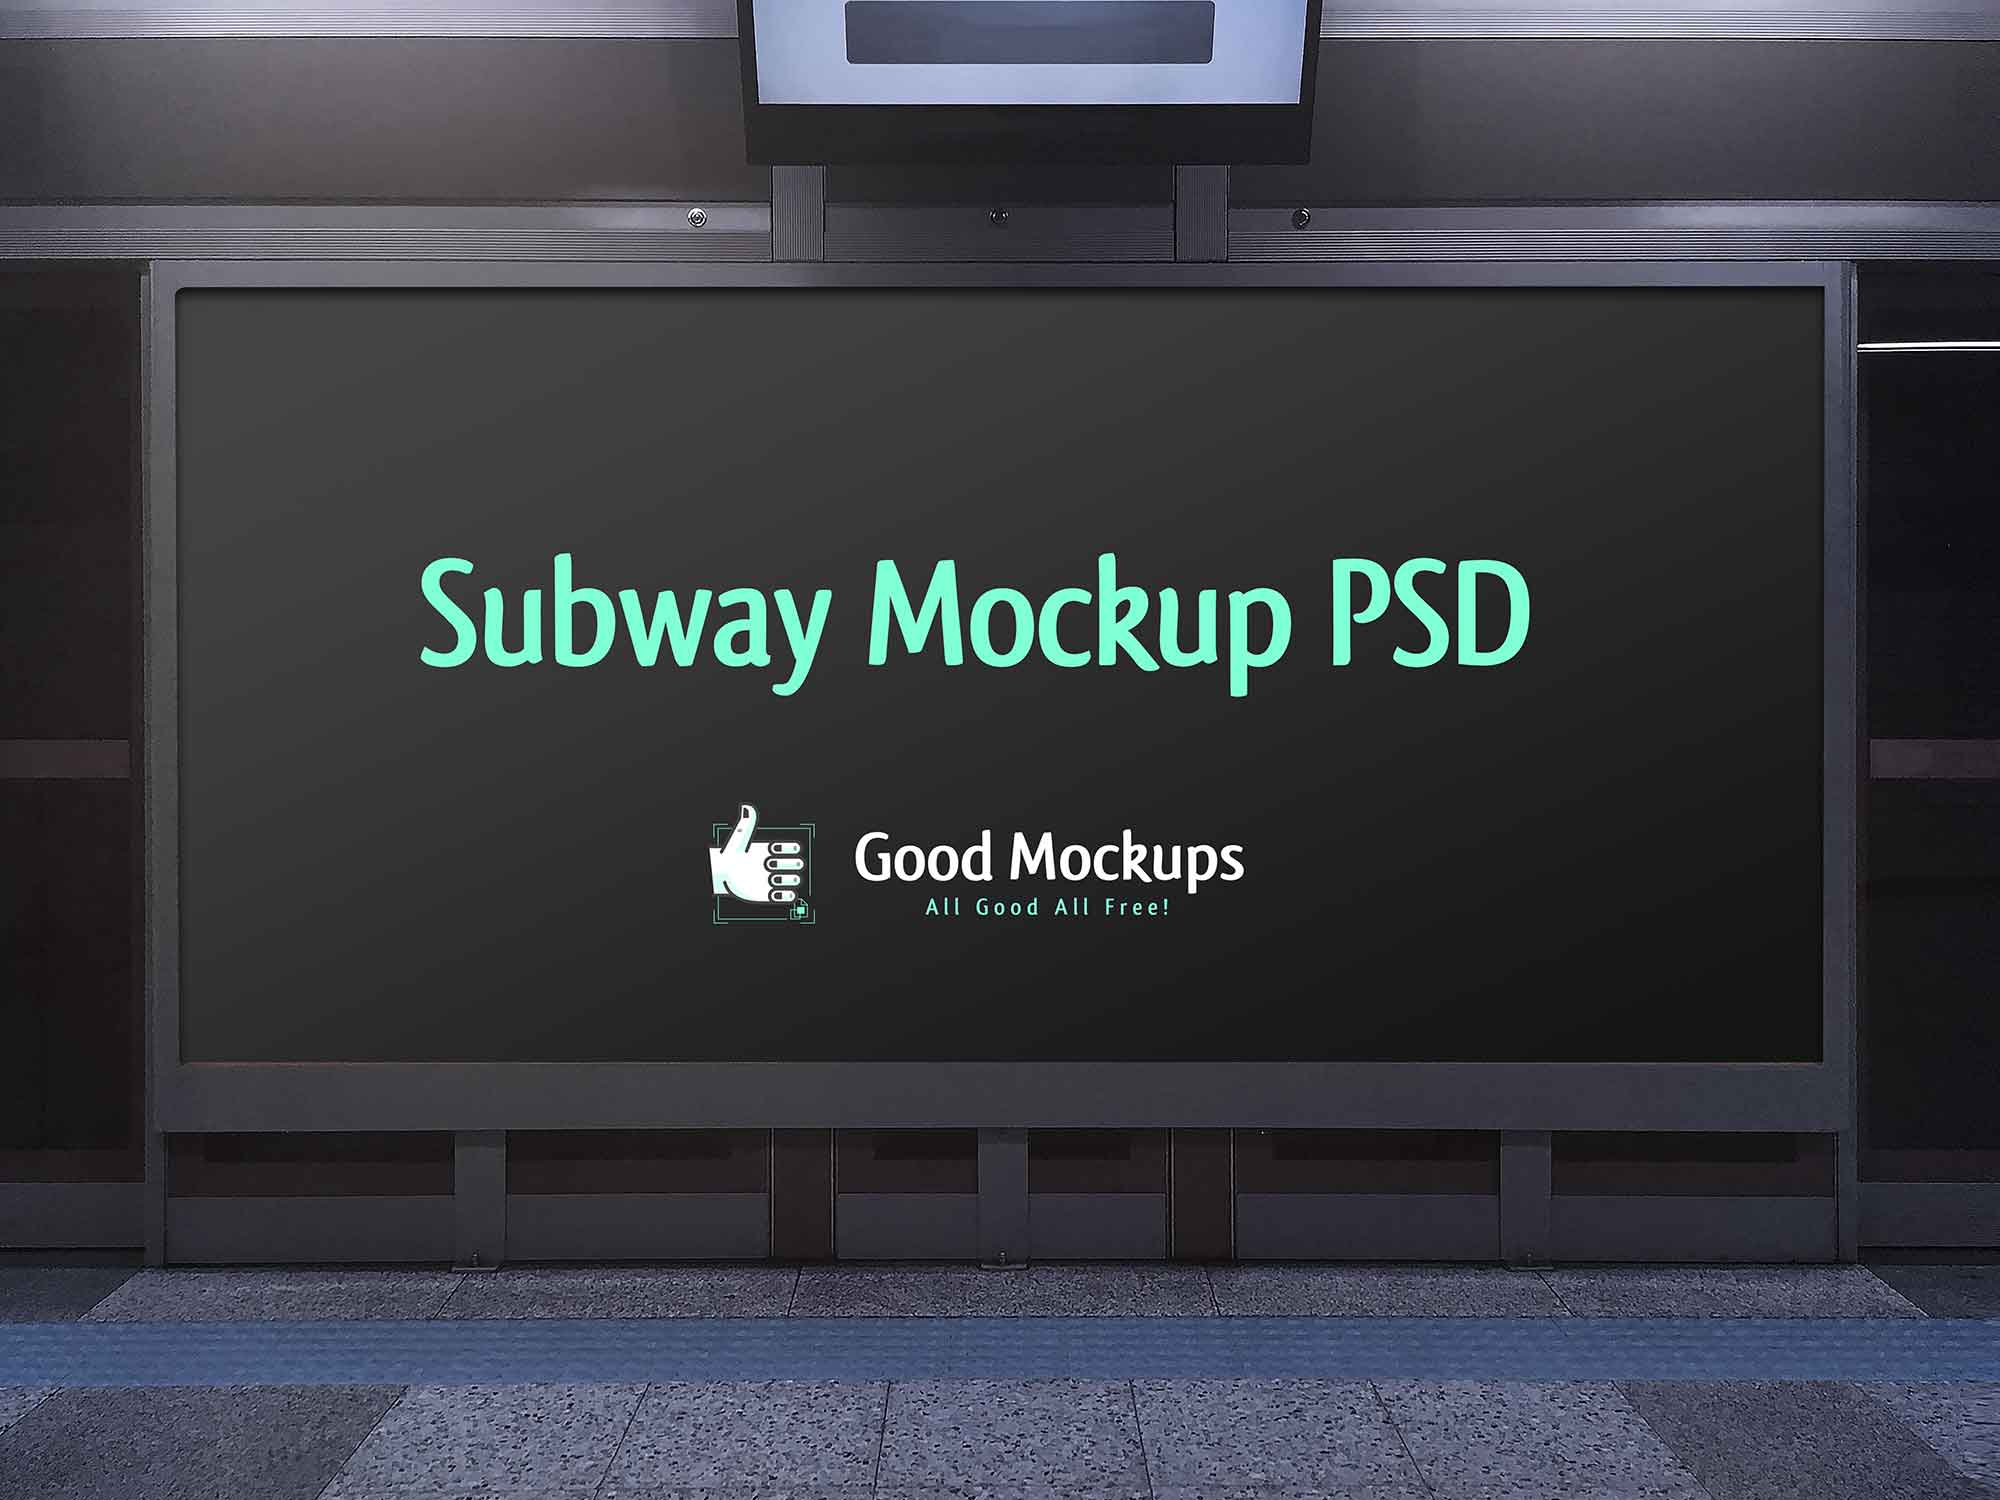 Advertising Subway Hoarding Mockup